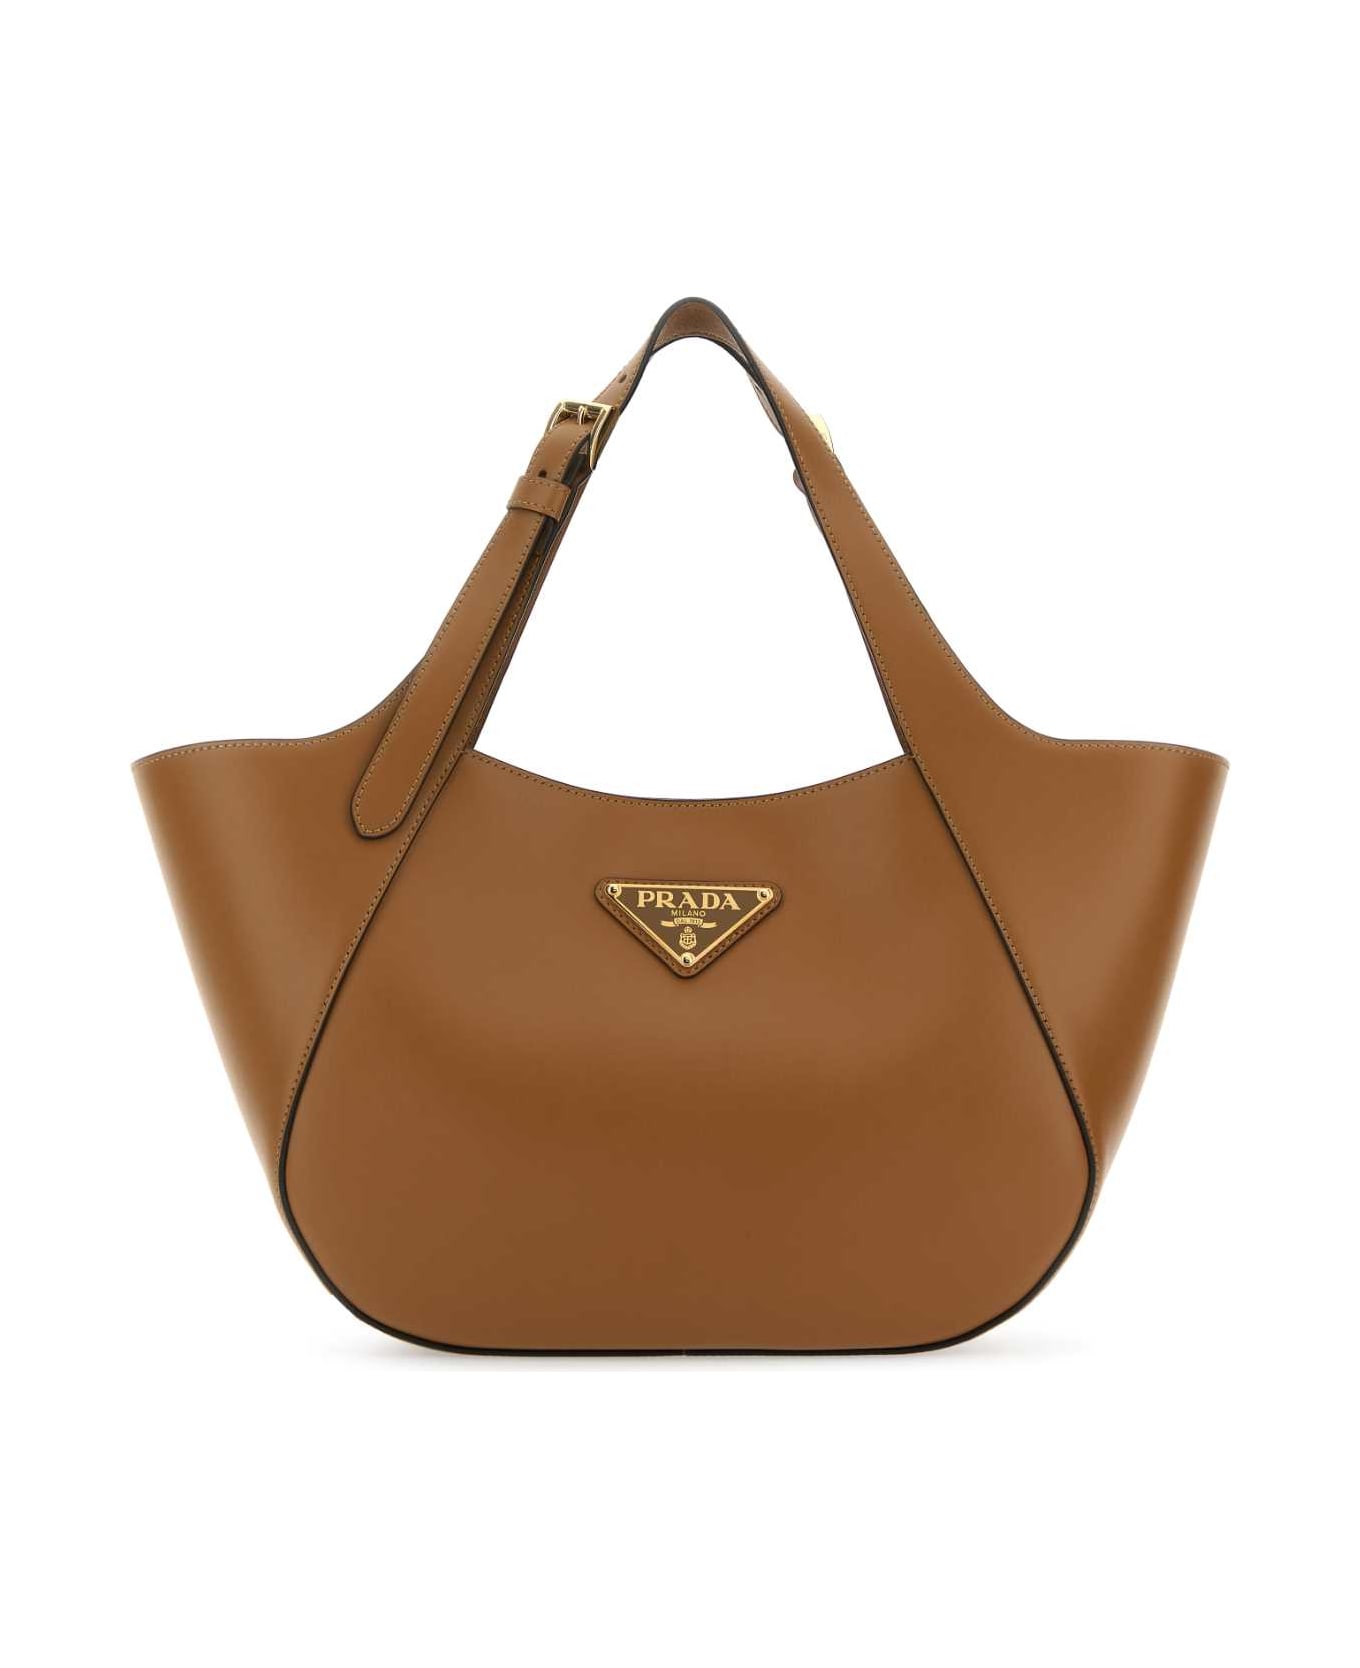 Prada Brown Leather Handbag - CARAMEL0N